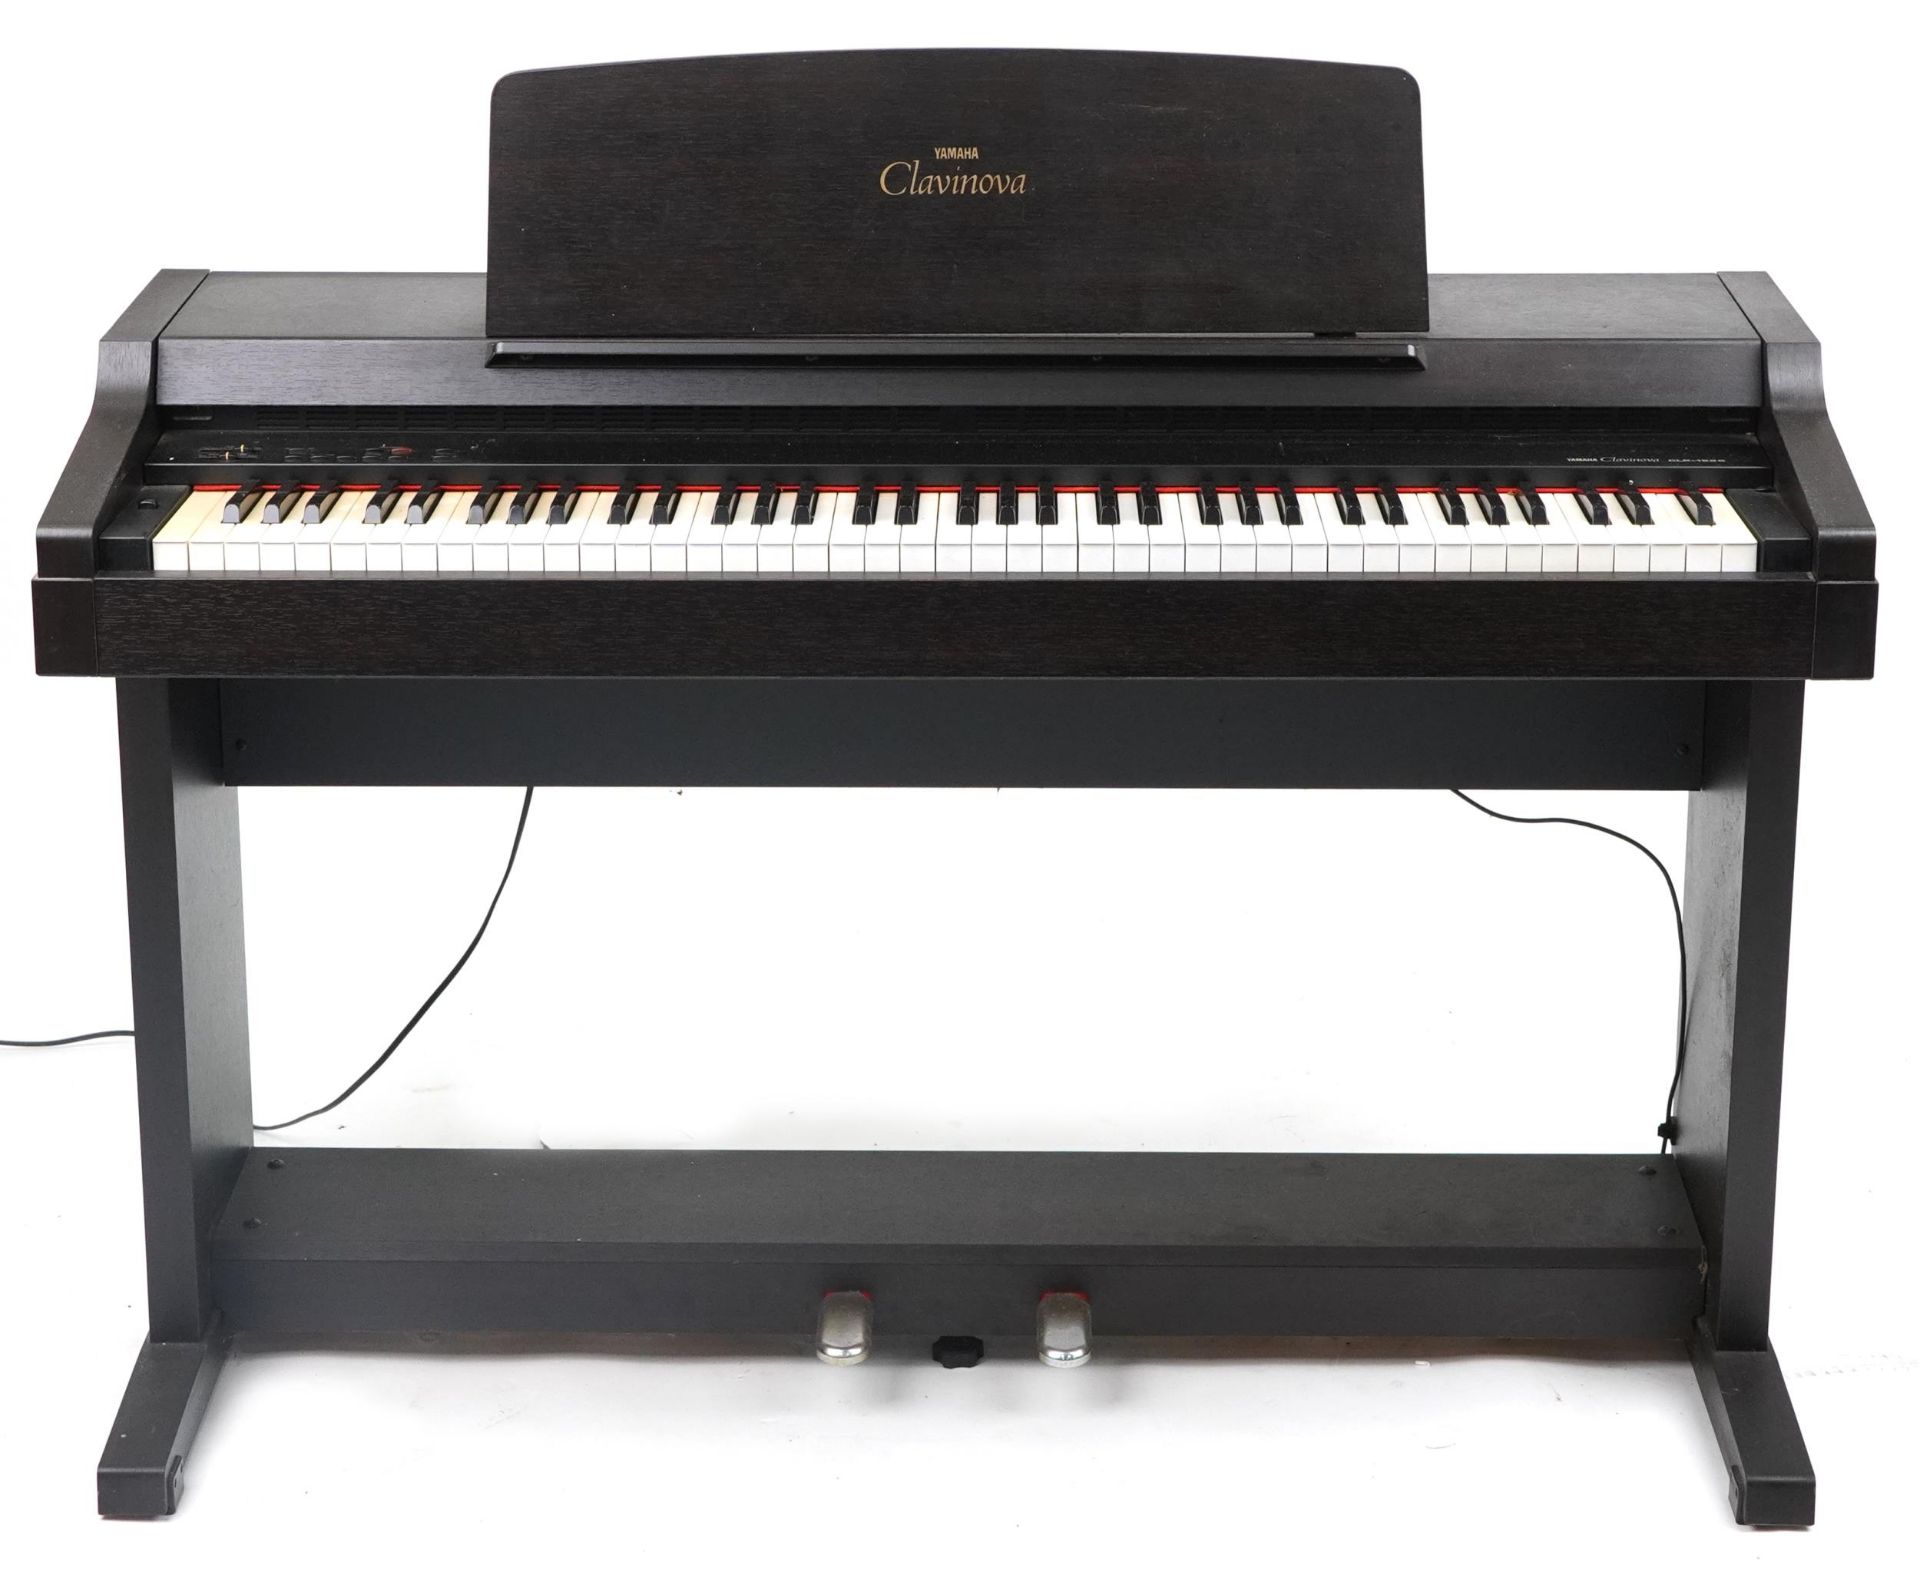 Yamaha Clavinova electric piano model CLP-152S, overall 103cm H x 120.5cm W x 46cm D - Image 2 of 6